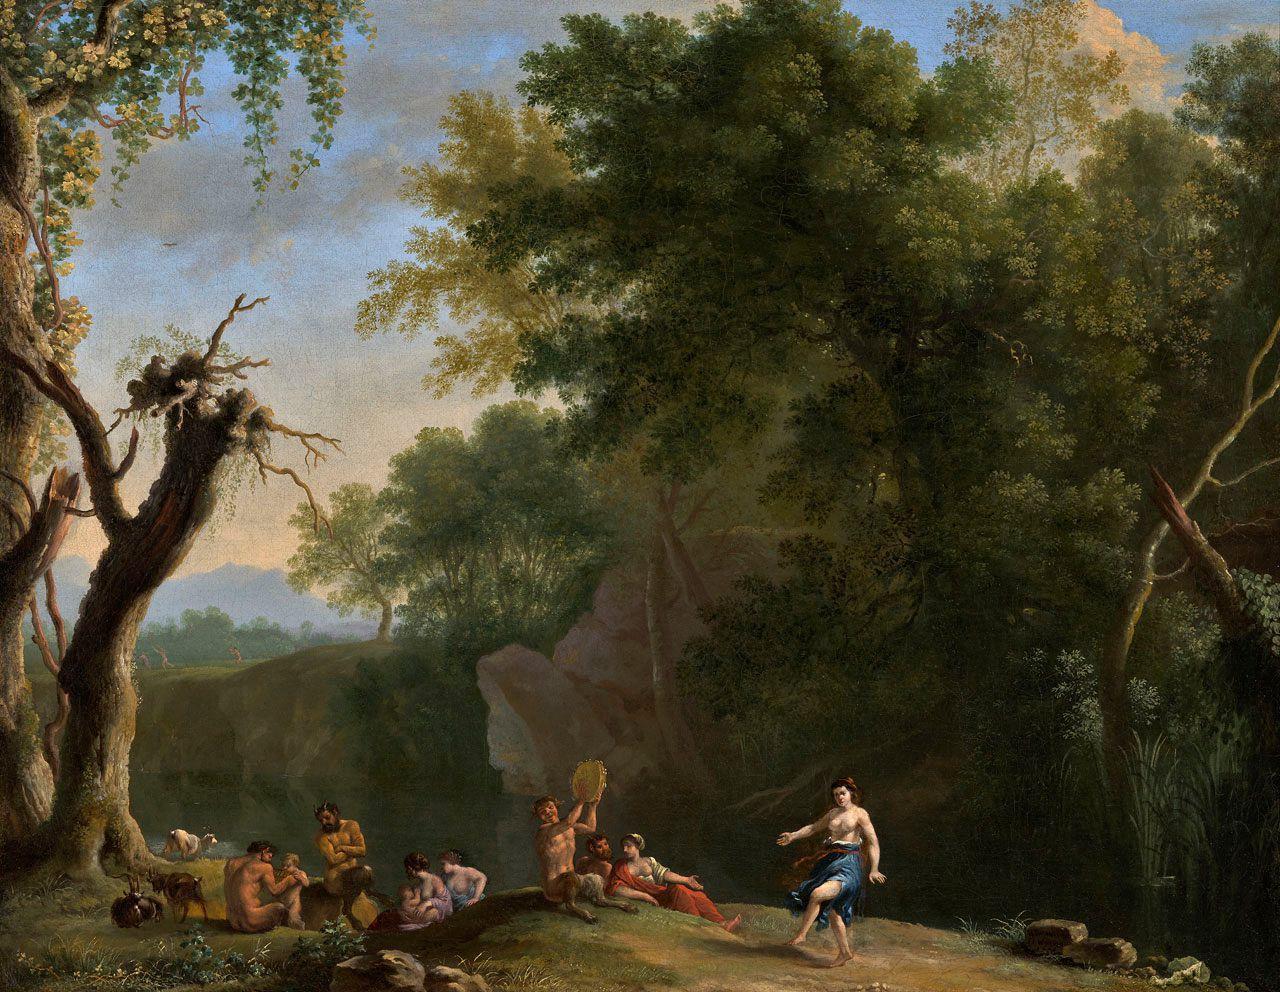 A Bacchanal in a Landscape
Herman  van Swanevelt 
17th Century
2019.42